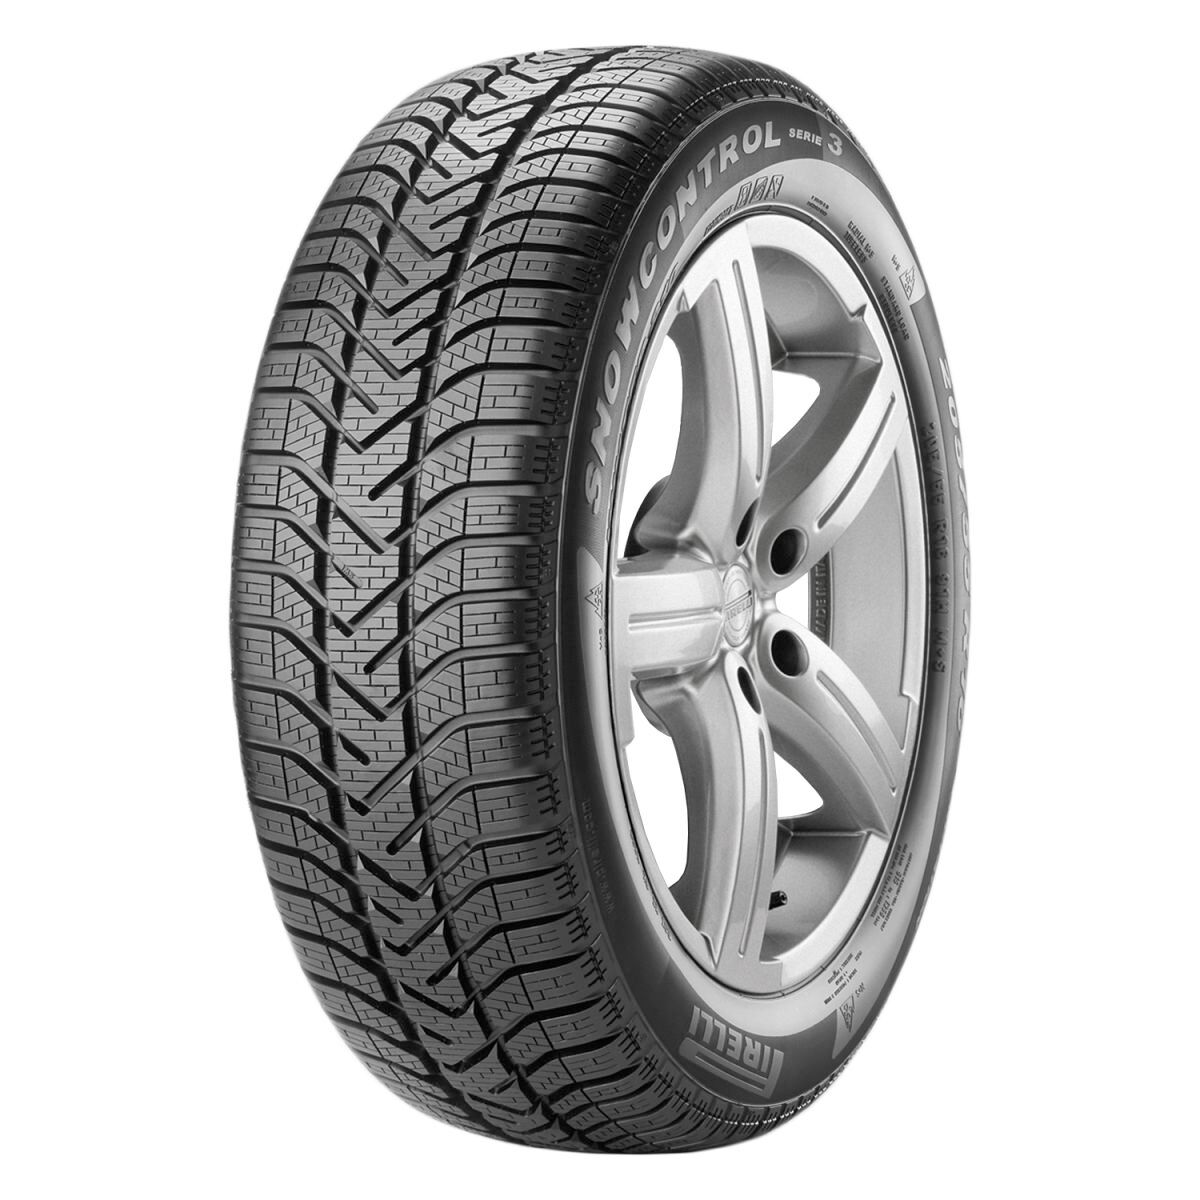 Neumáticos de invierno PIRELLI SnowControl serie III 195/60R16 89H